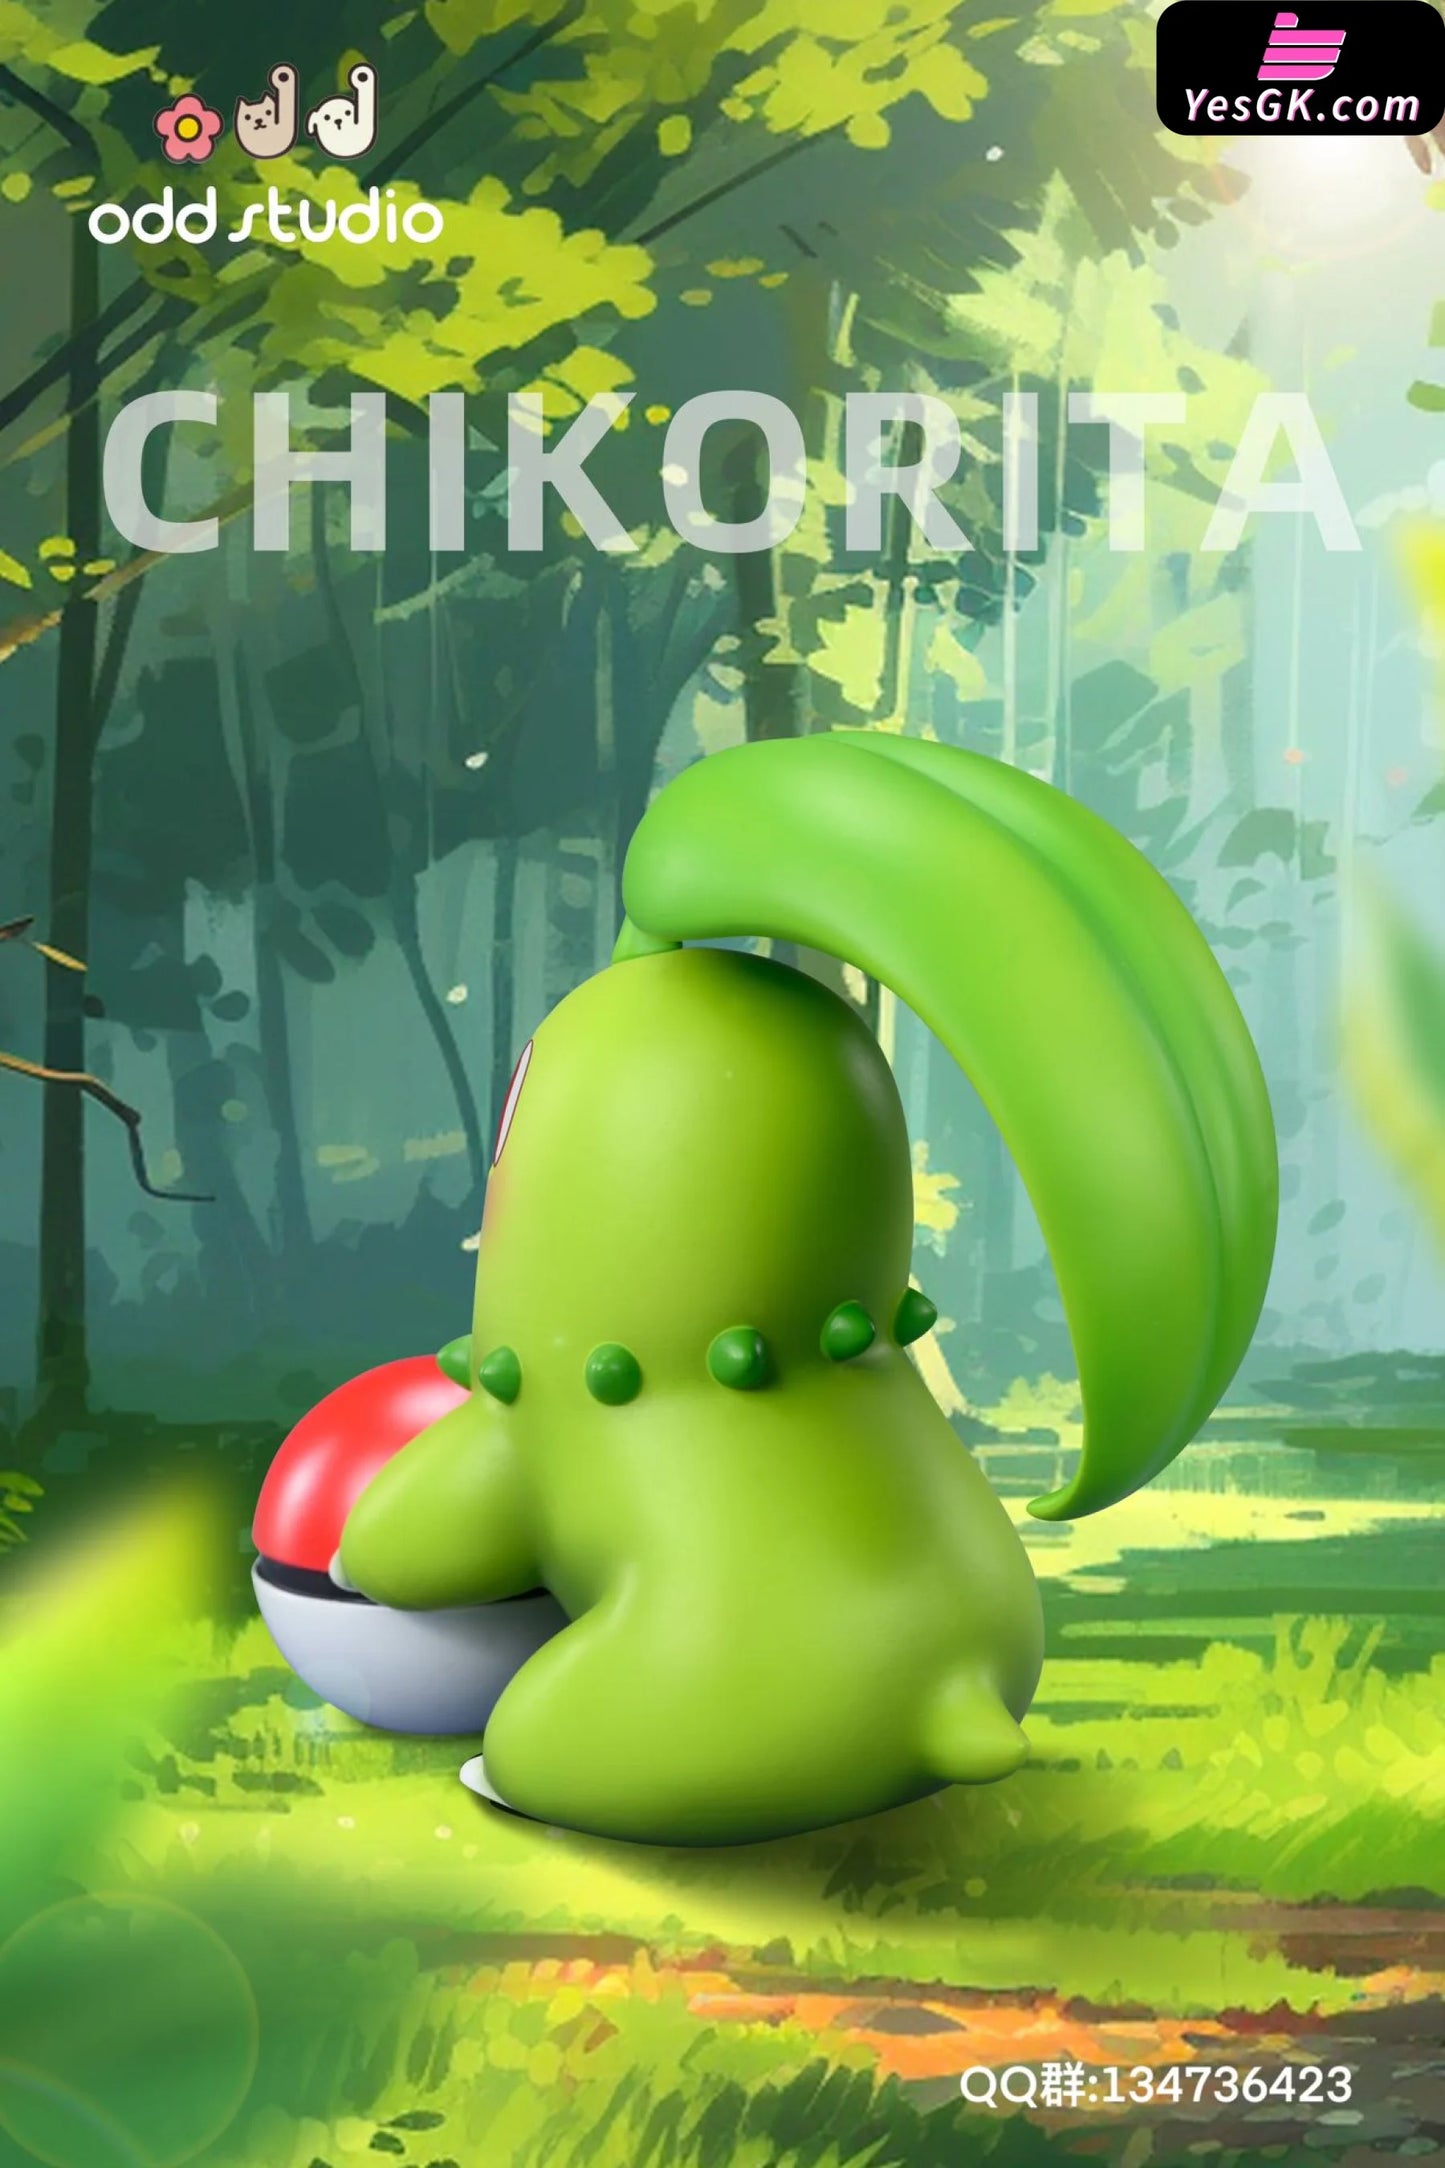 Pokemon Sitting Chikorita Resin Statue - Odd Studio [Pre - Order] Pokémon